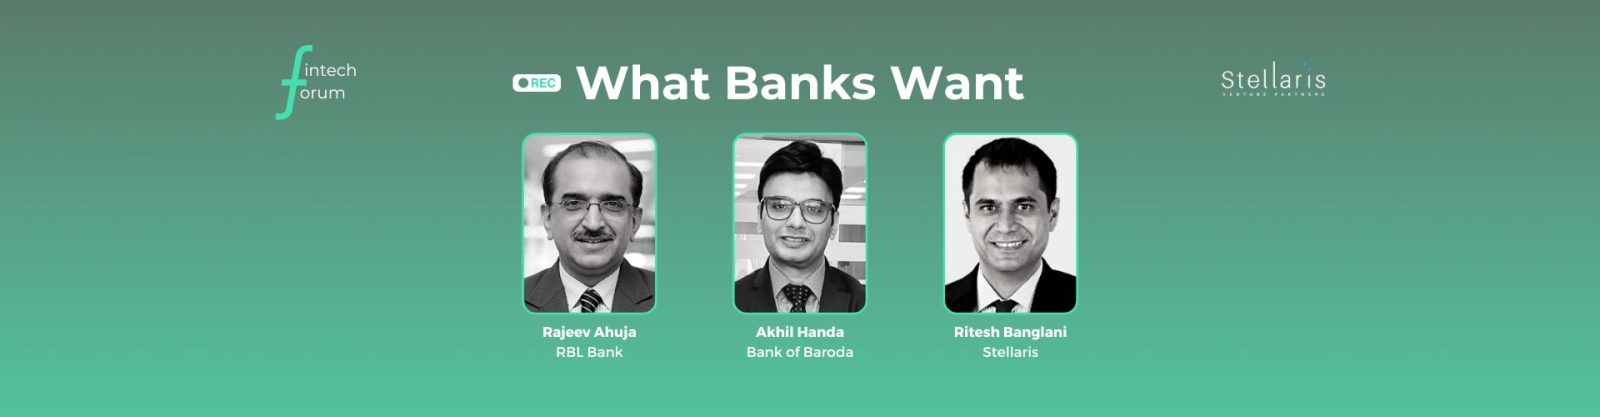 Fintech Forum #3: What Banks Want